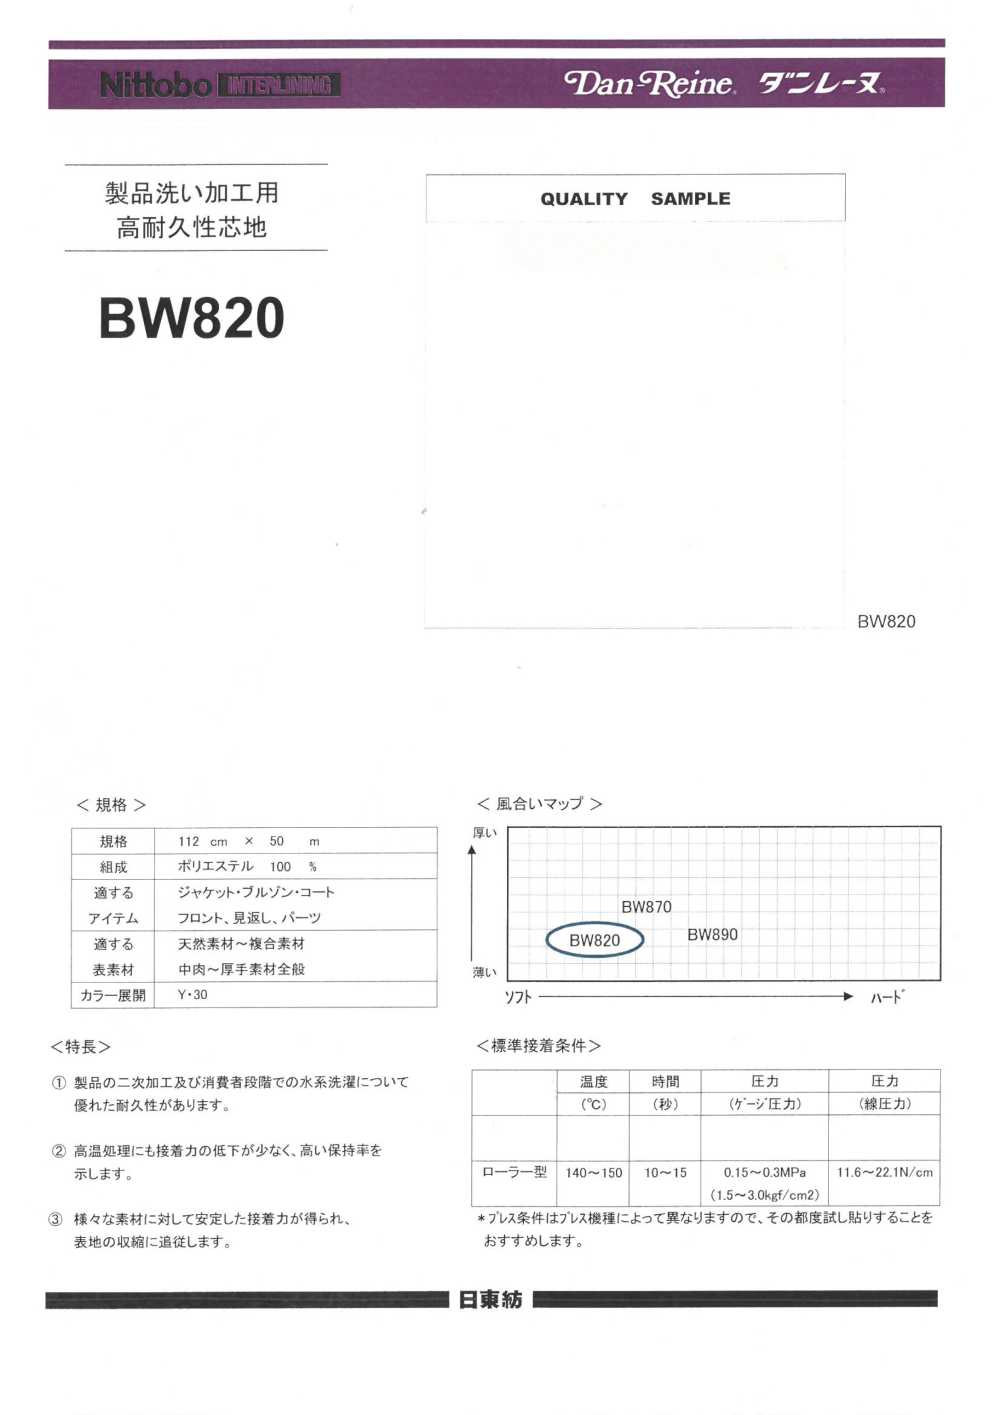 BW820 產品水洗加工/水洗耐用襯布（30D） 日東紡績